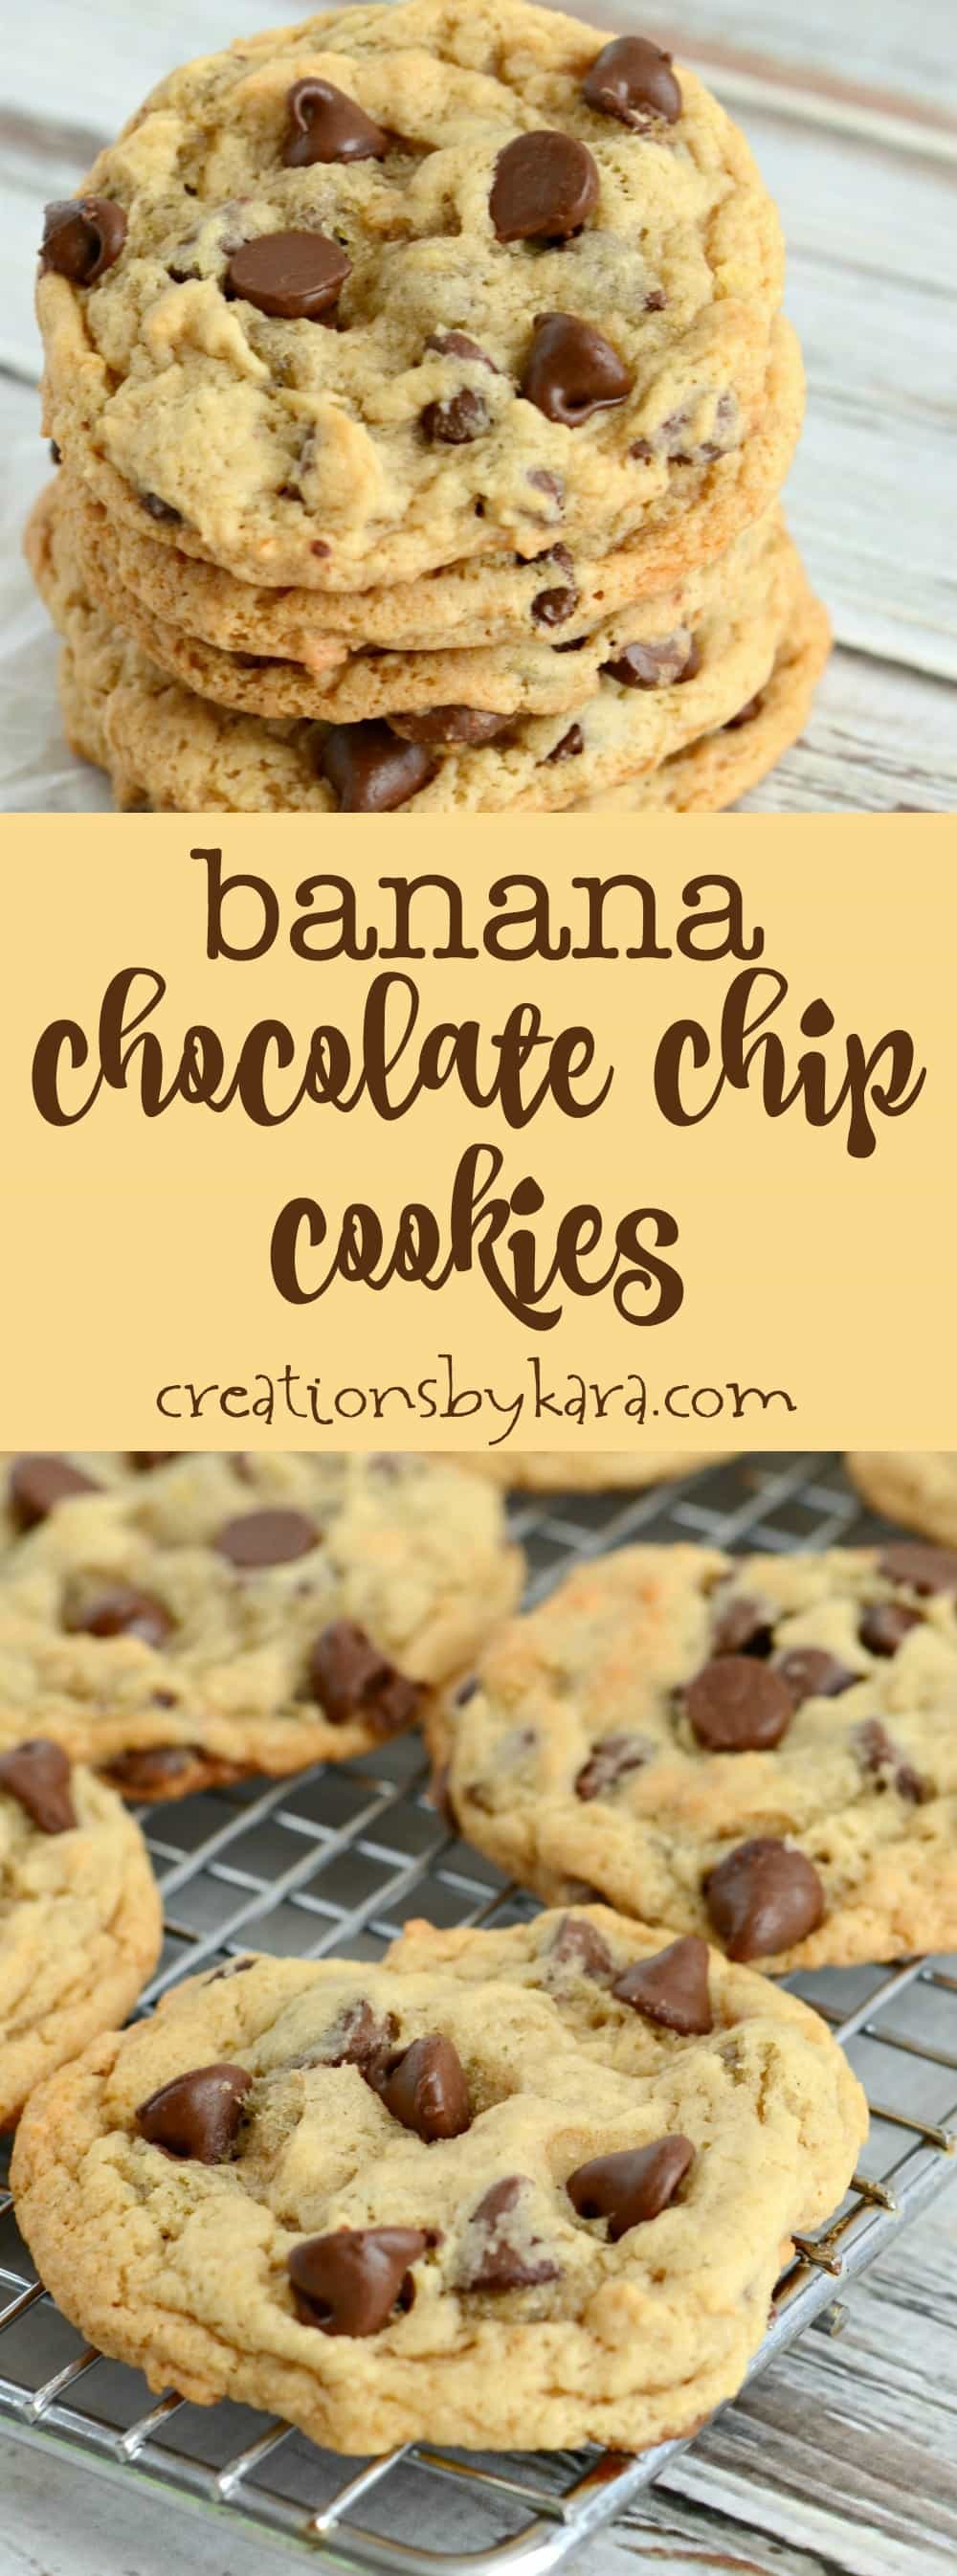 Banana Chocolate Chip Cookies - Creations by Kara